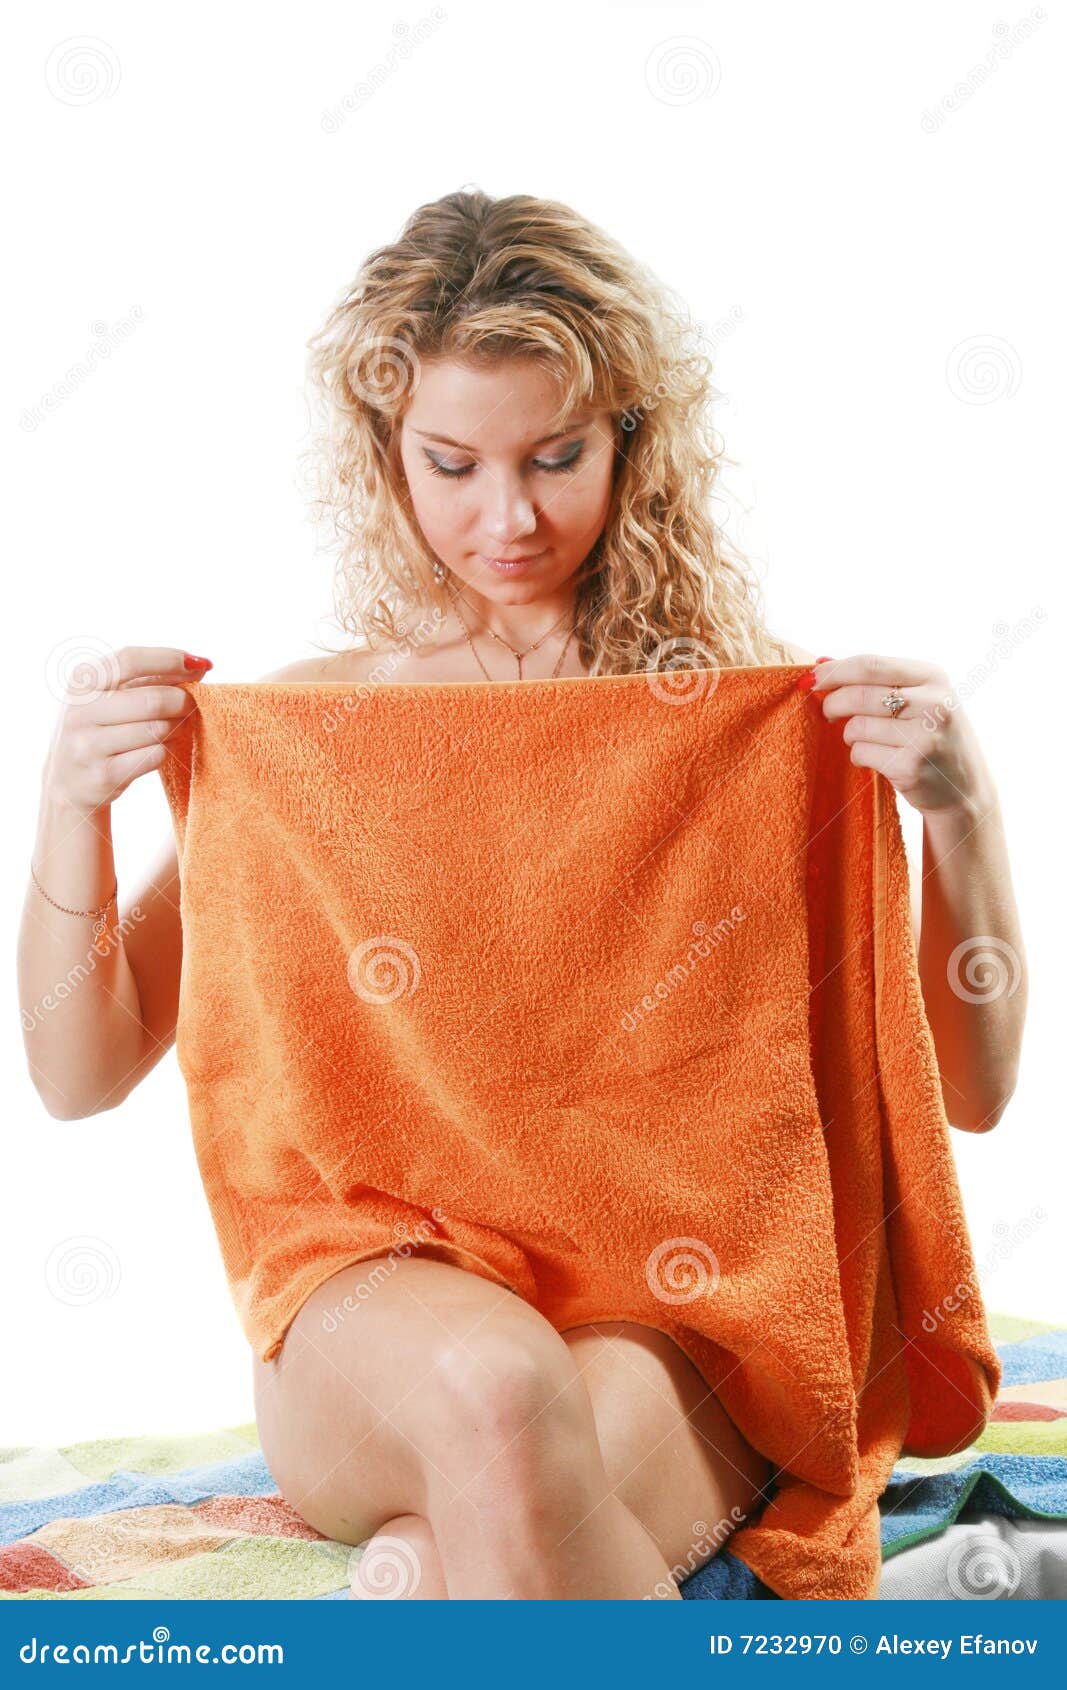 Работа в полотенце. Девушка в полотенце. Юная девушка в полотенце. Женщина в одном полотенце. Молодые девушки в полотенце.